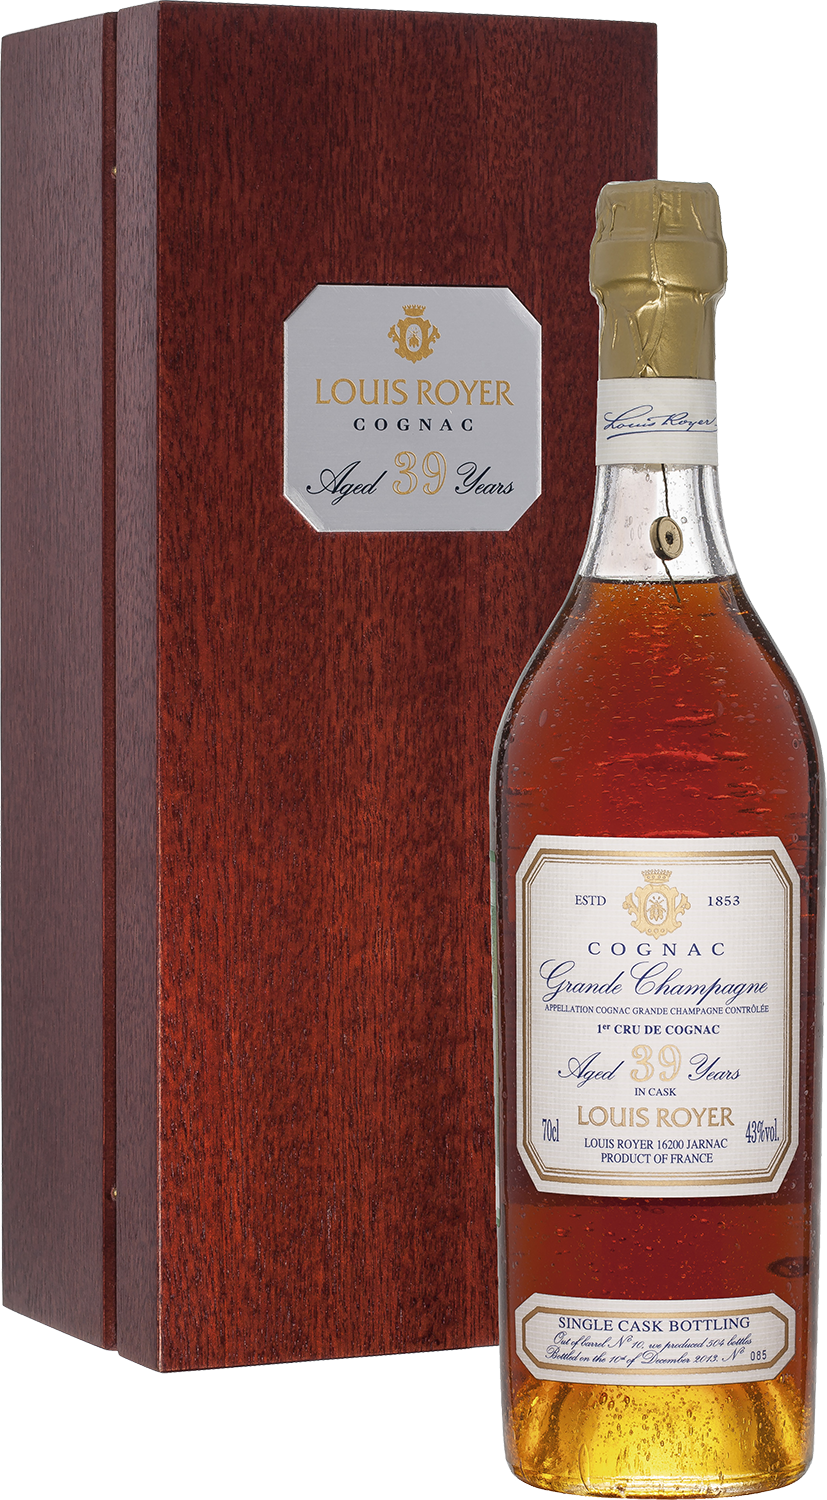 Cognac Louis Royer 39 years Grande Champagne (gift box) roullet cognac vs grande champagne